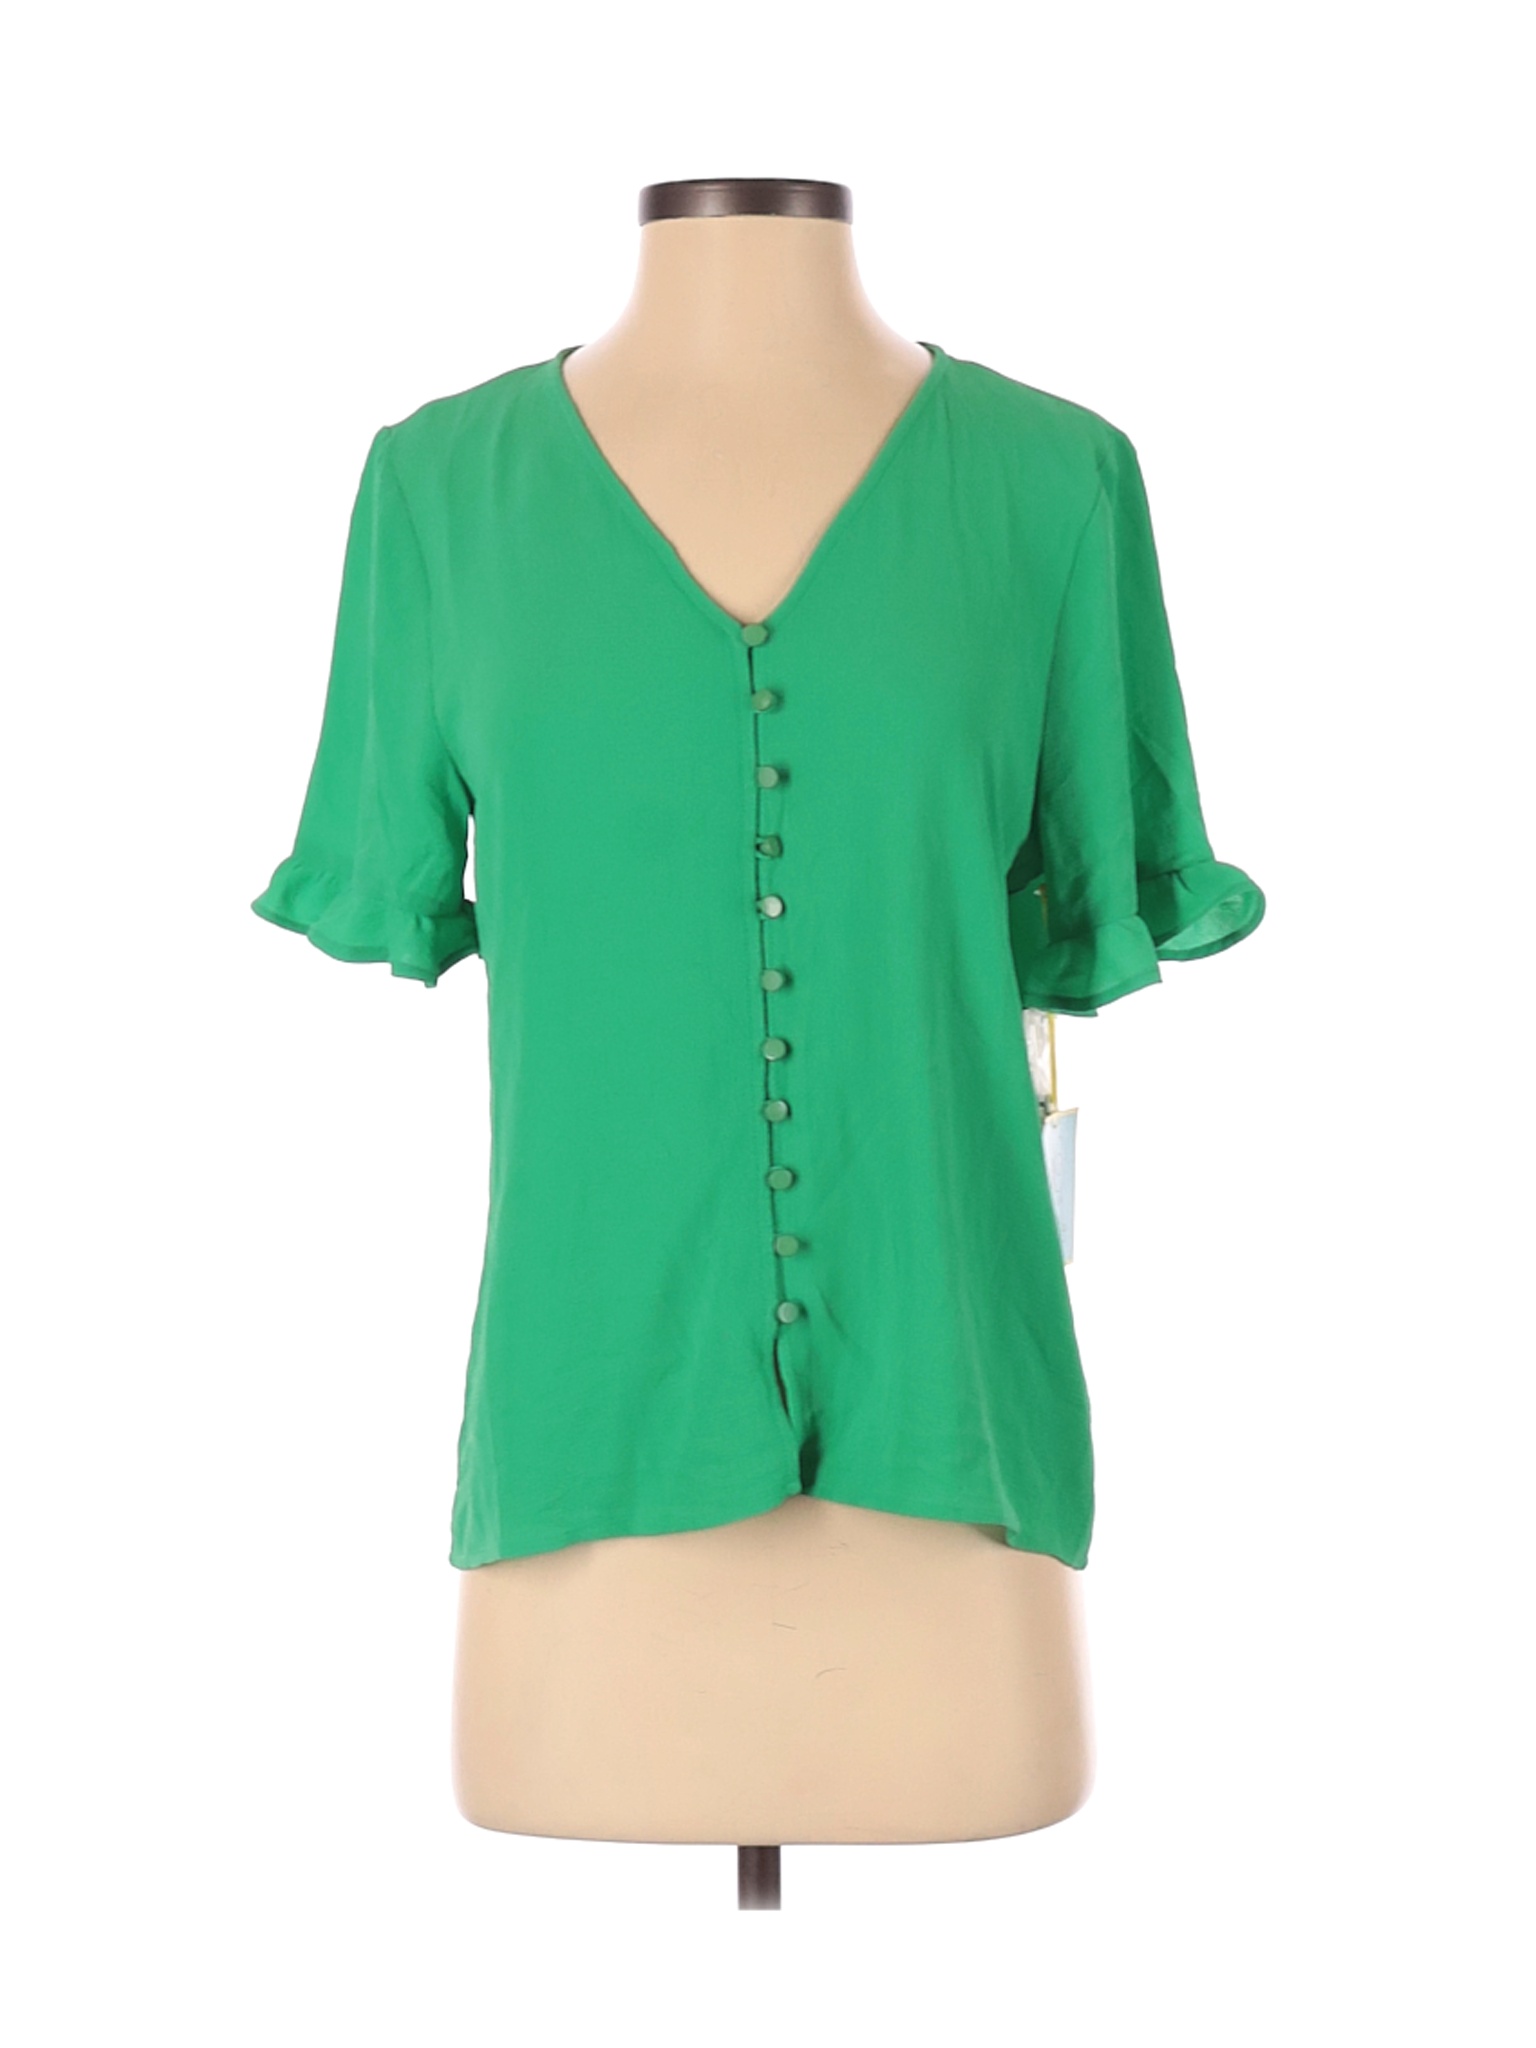 NWT CeCe Women Green Short Sleeve Blouse S | eBay